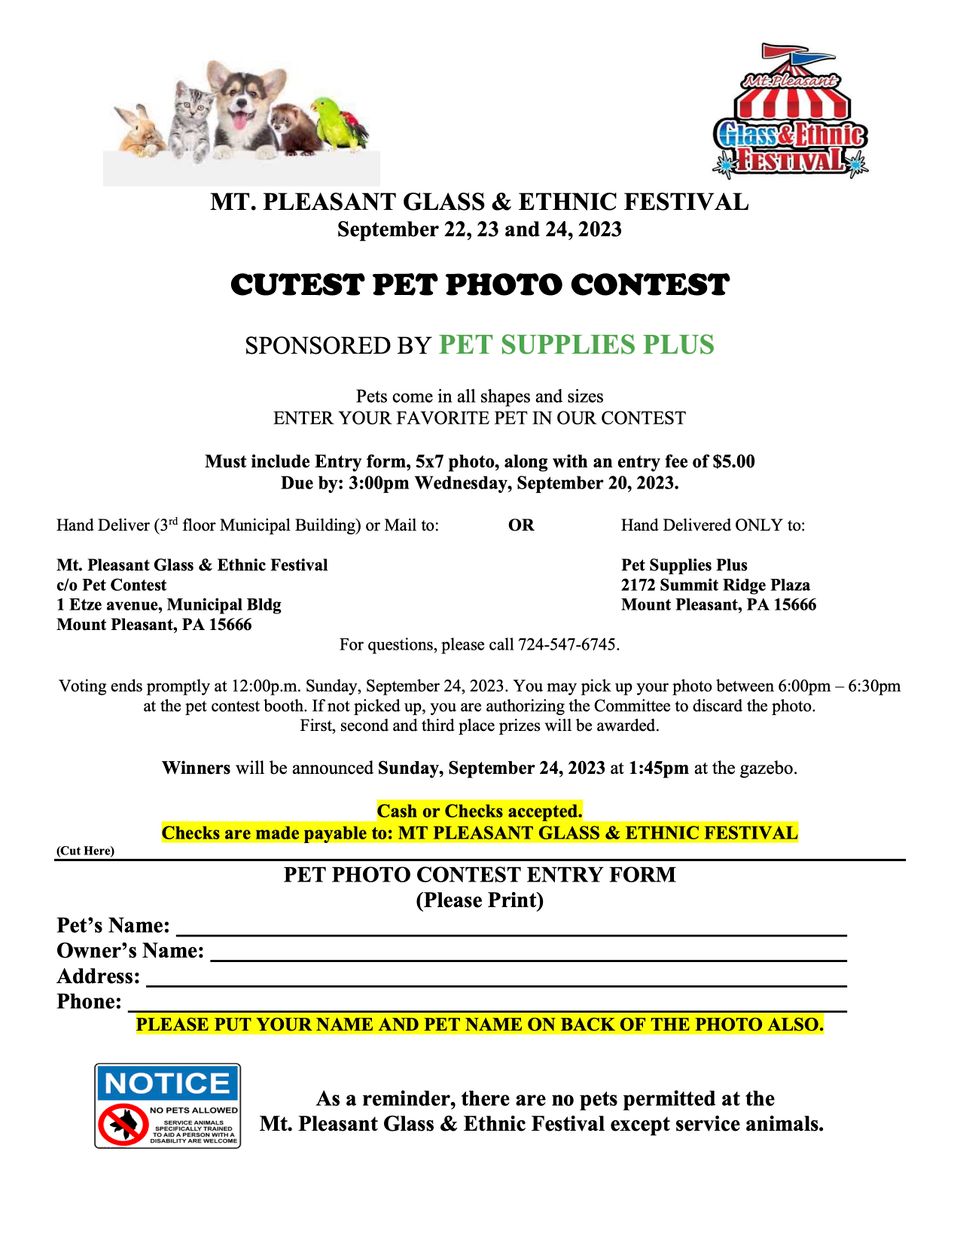 Pet contest entry form 2023 (1)